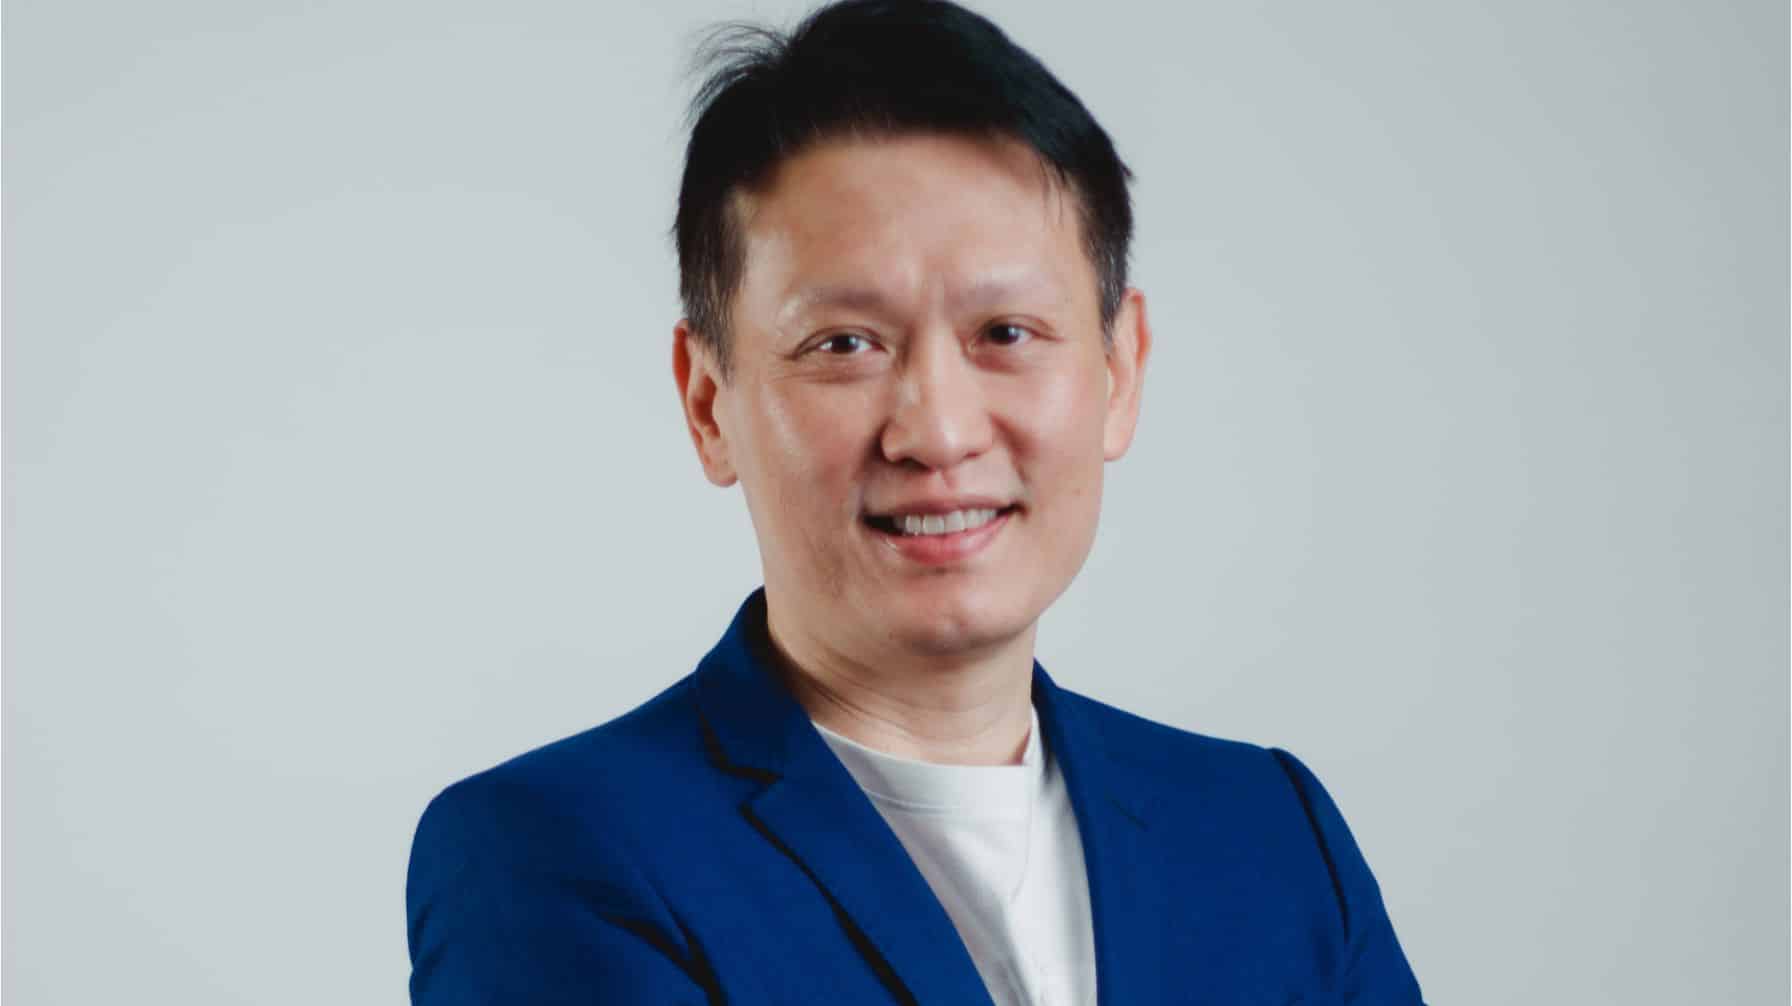 Binancen toimitusjohtaja Richard Teng